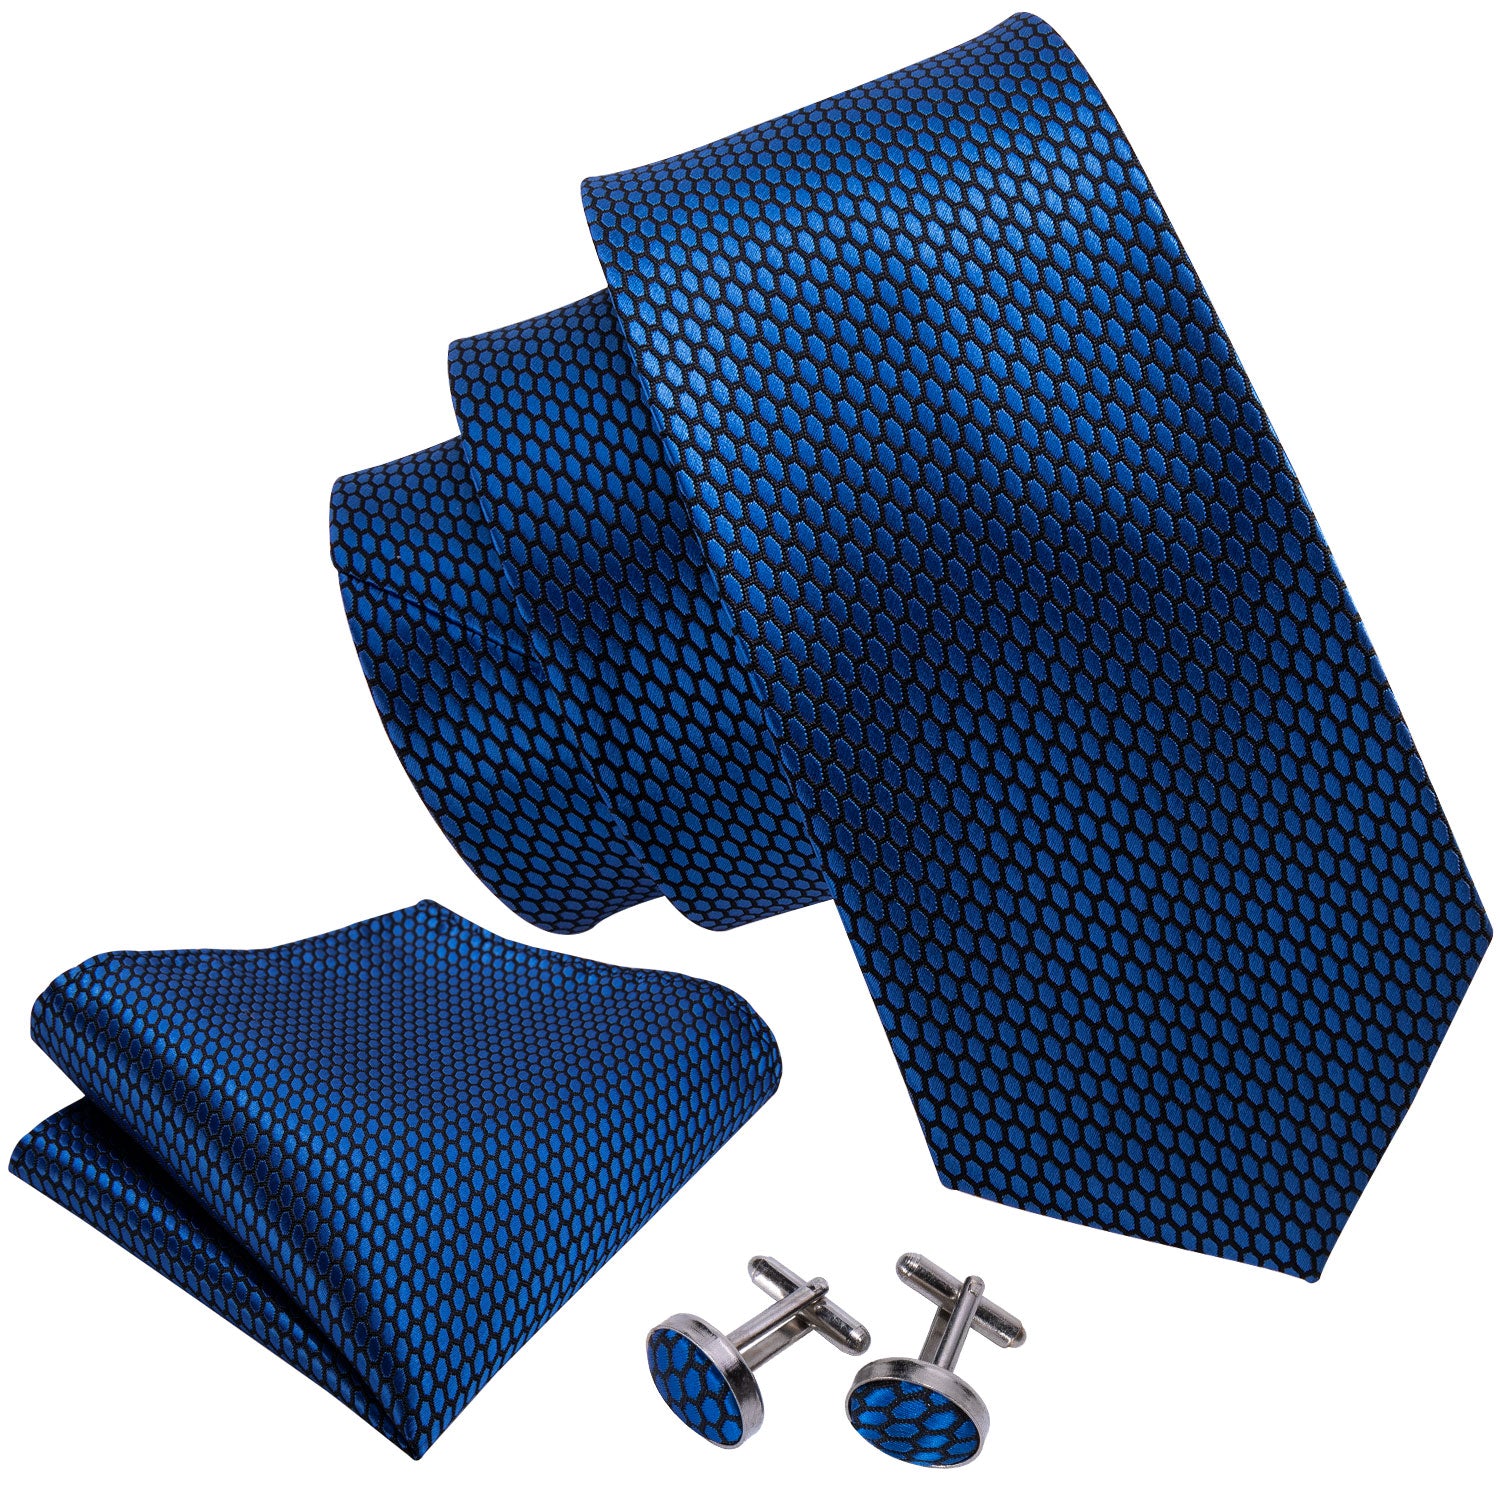 Barry.wang Red Tie  Navy-Blue Geometric Polka Dot Tie Pocket Square Cufflinks Set